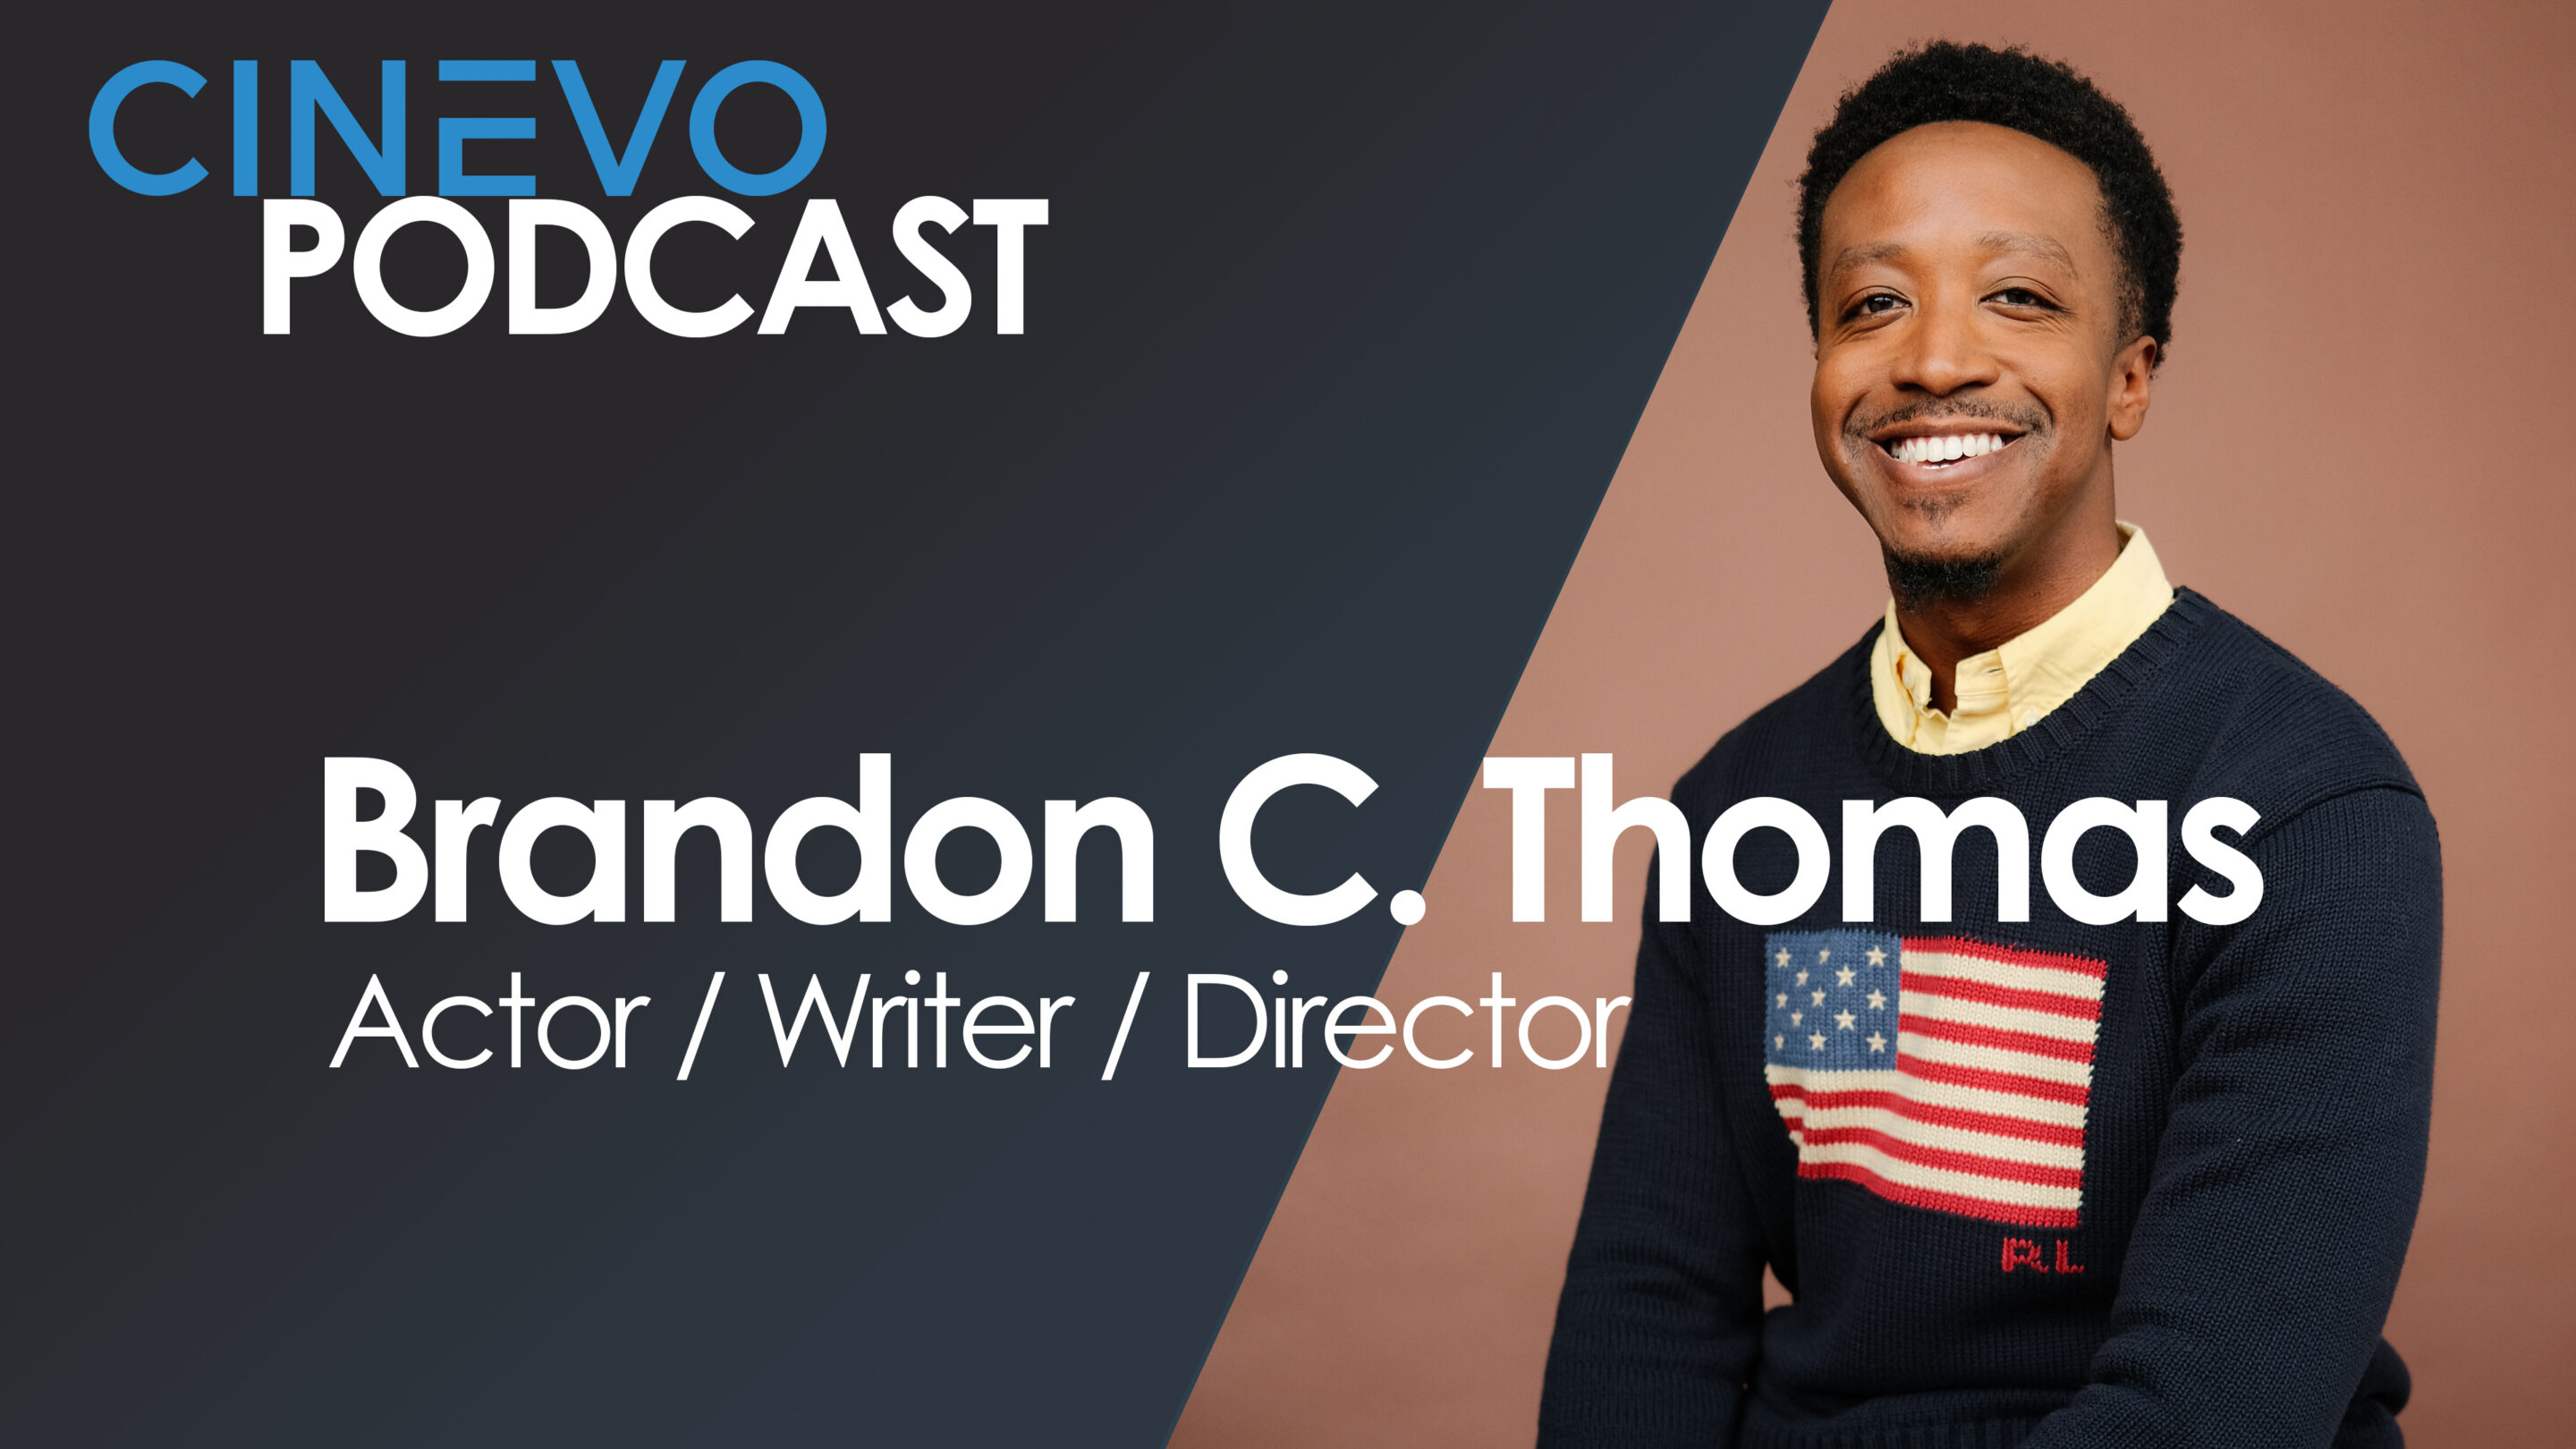 Cinevo Podcast - Brandon C. Thomas